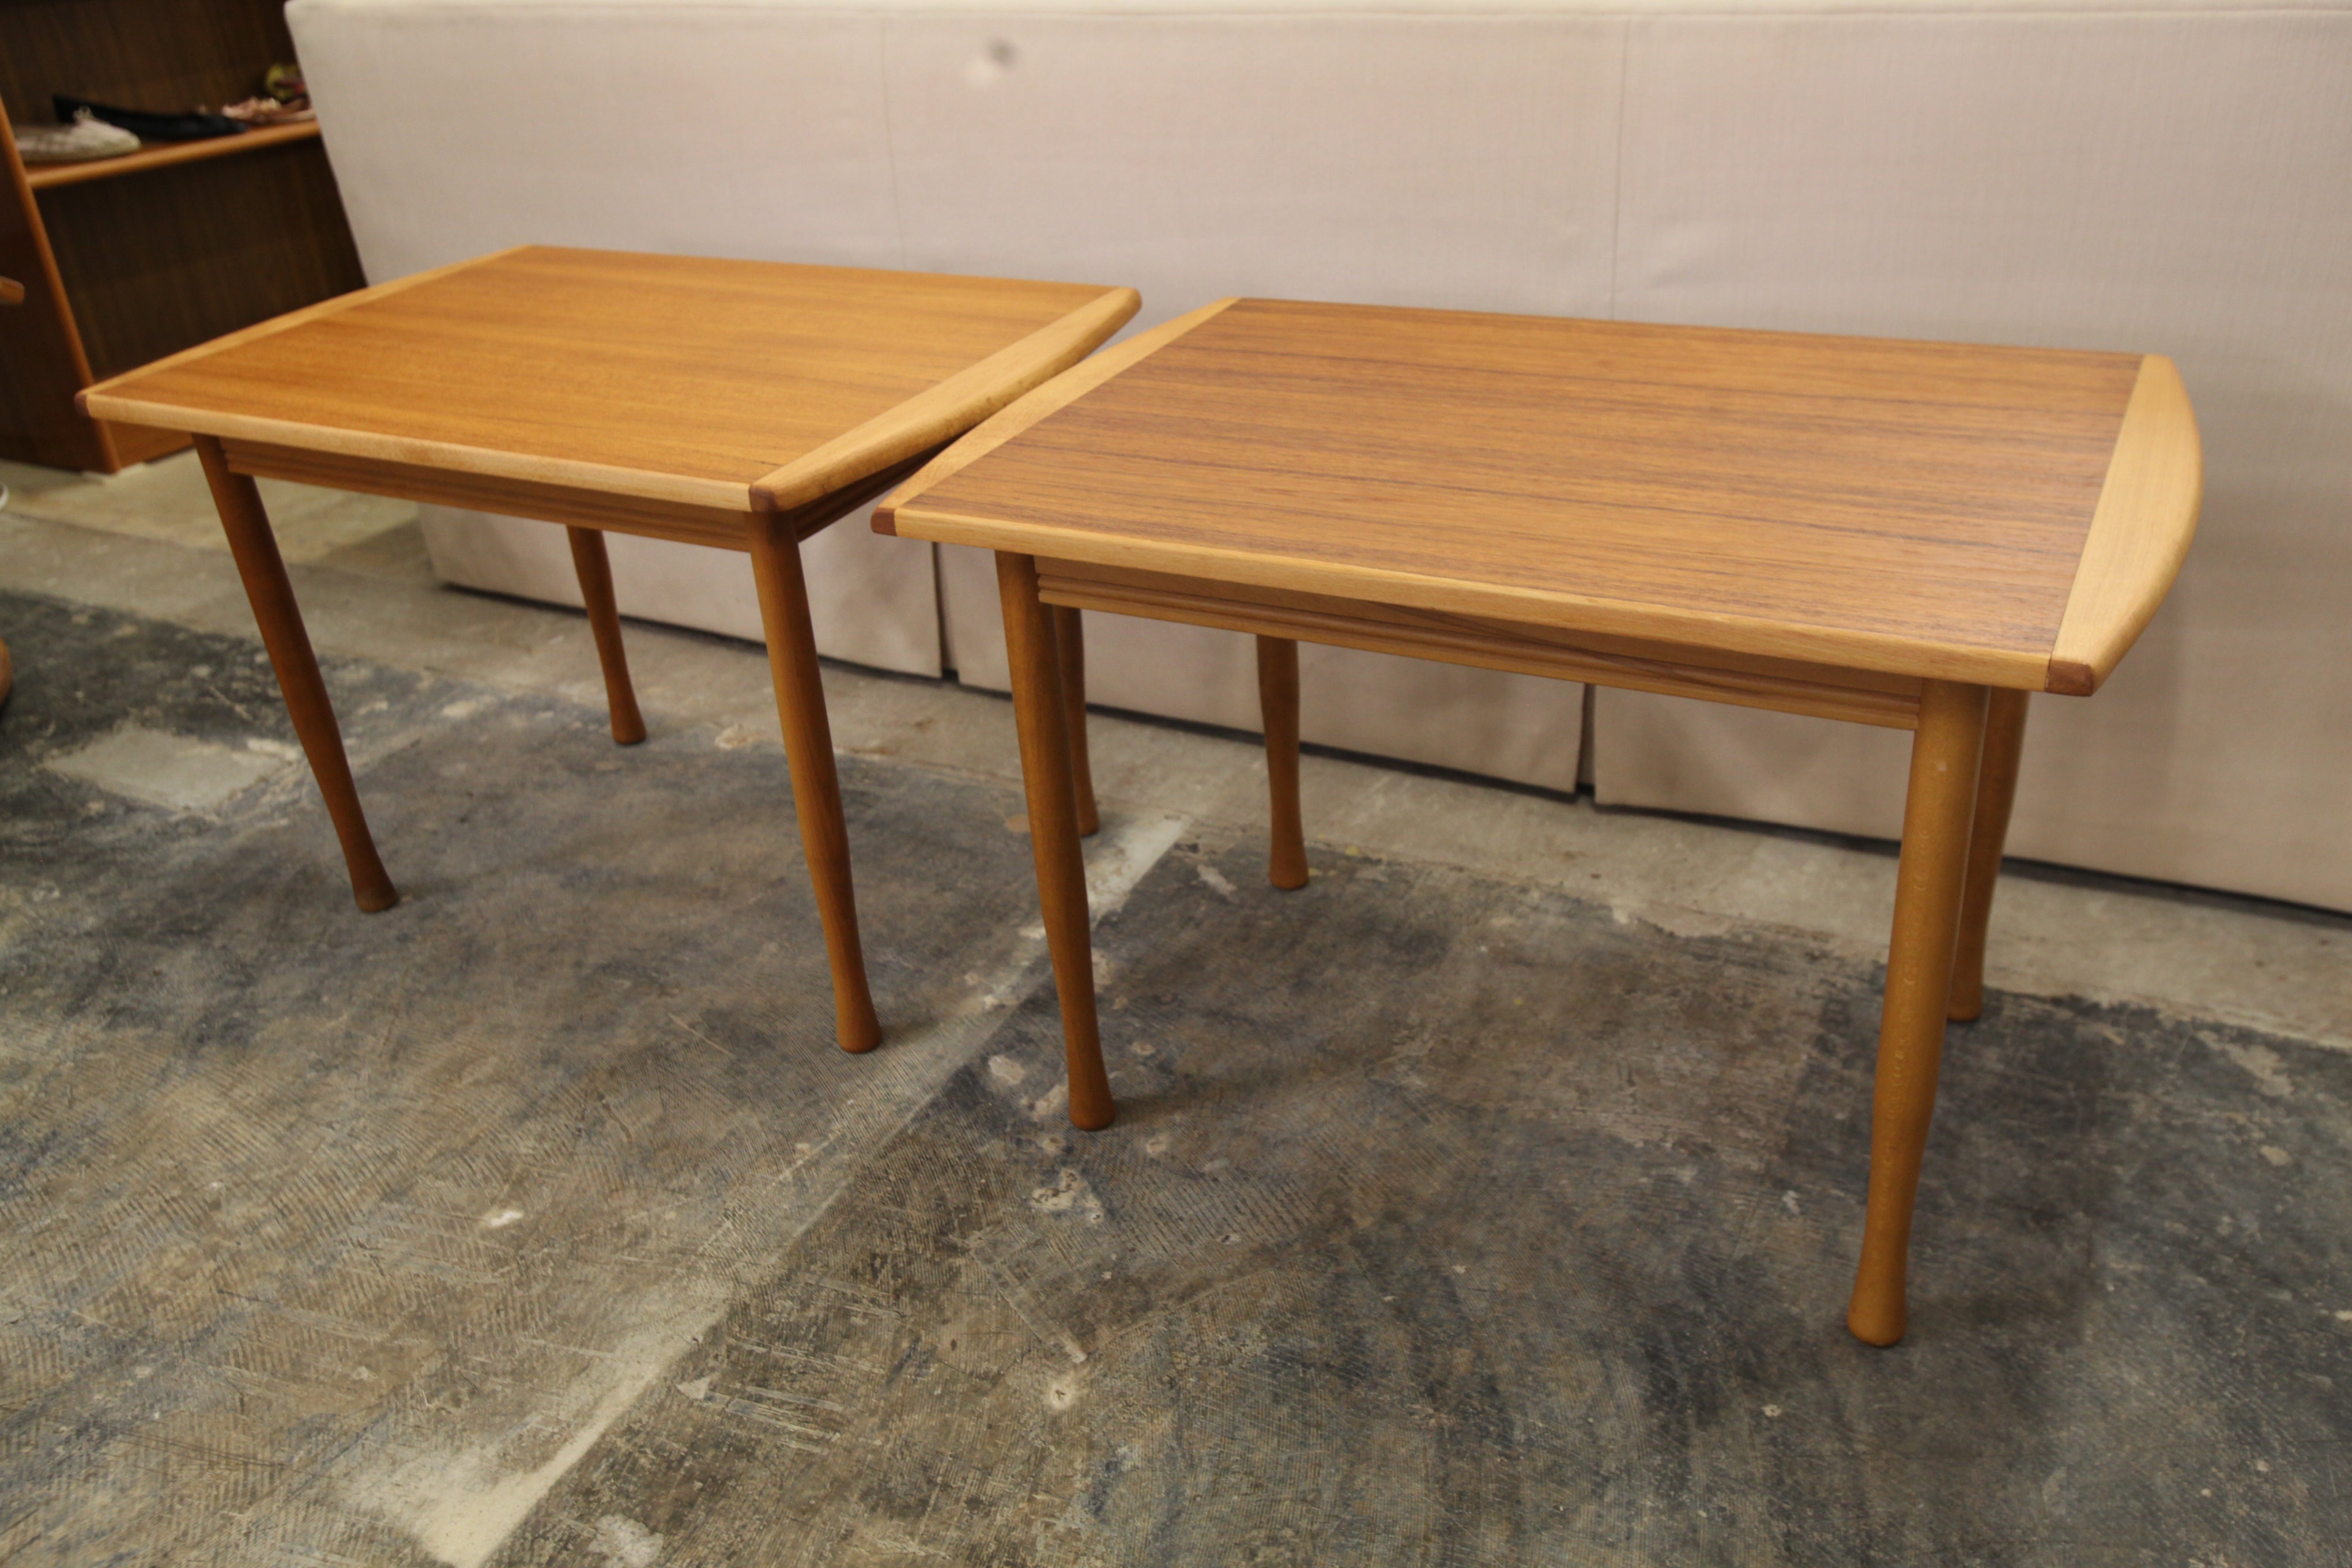 Vintage Teak Side Table (30.25" x 20" x 20"H)